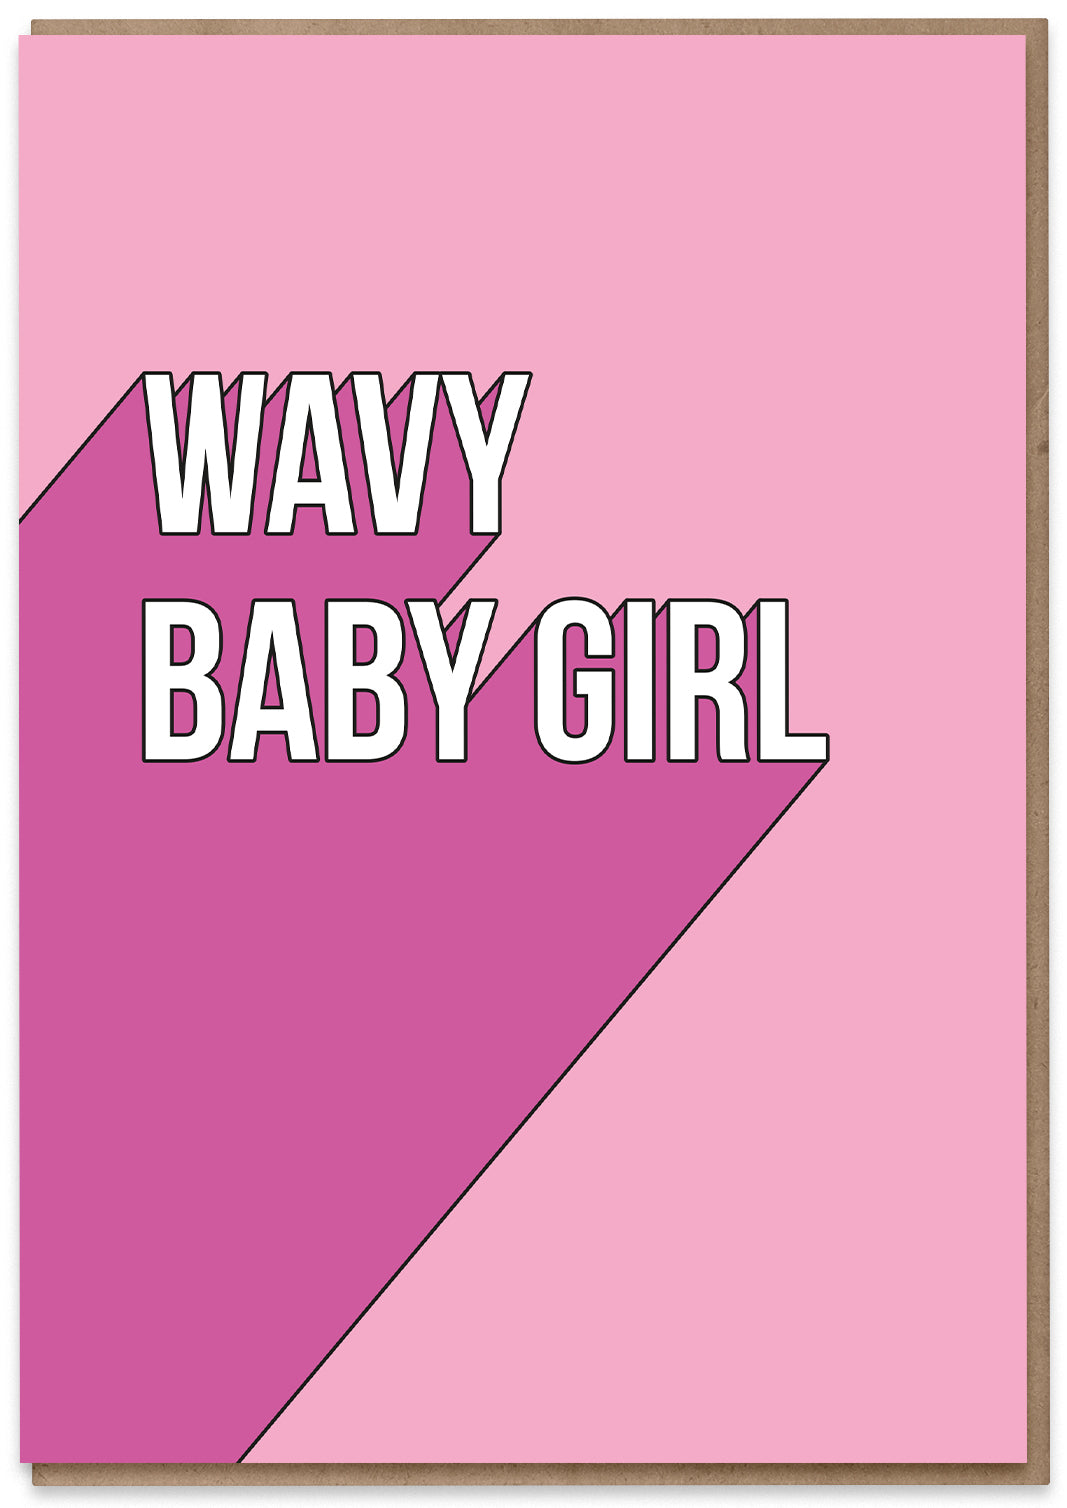 Wavy Baby Girl